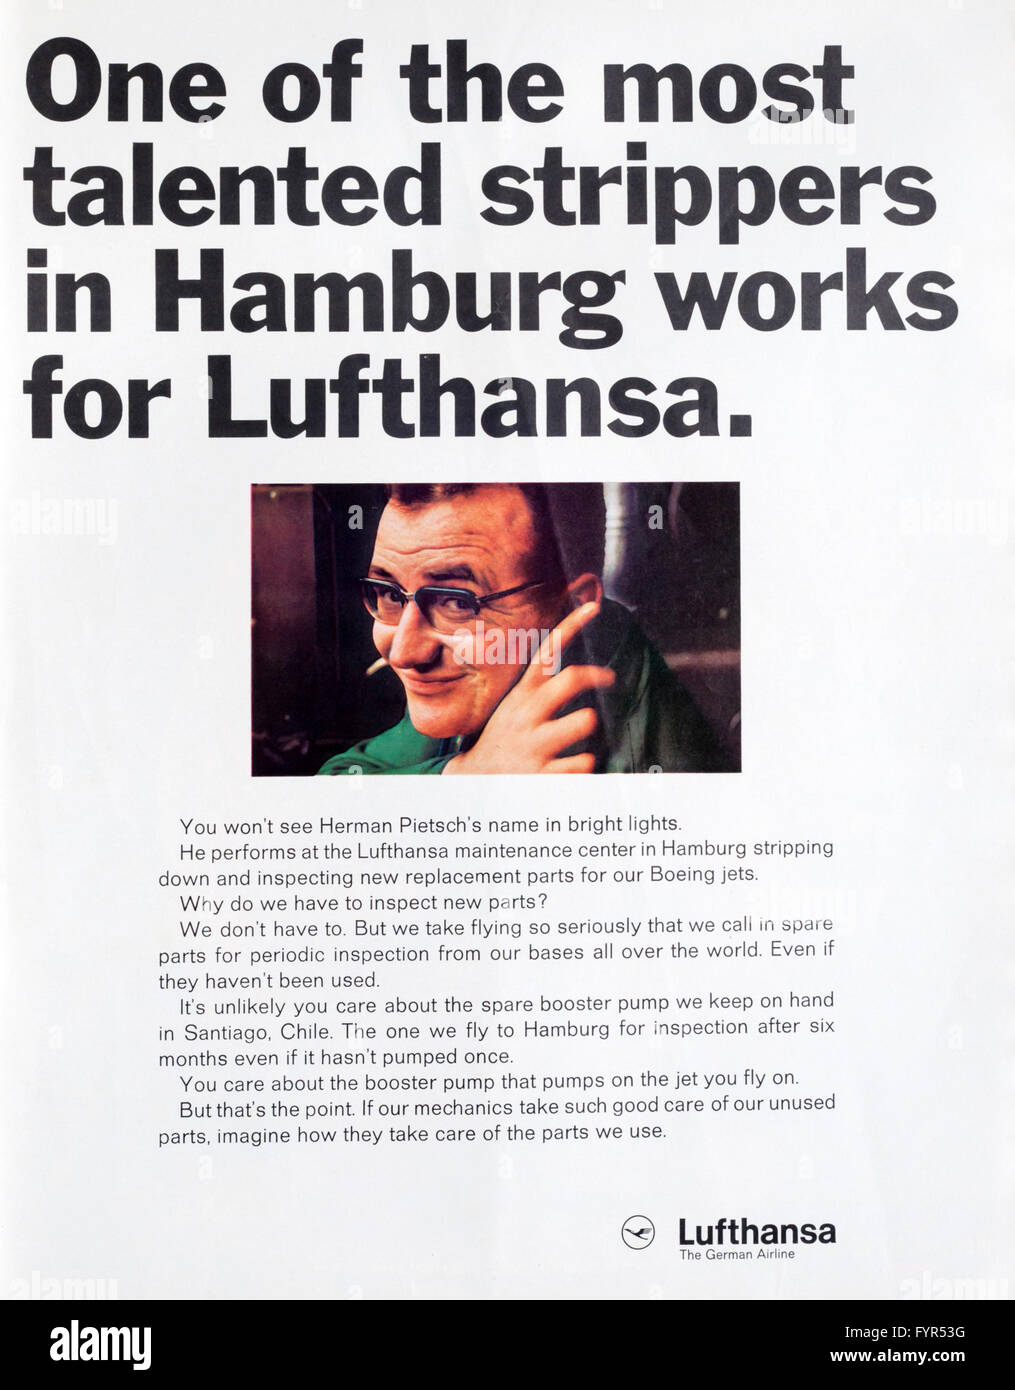 1960s magazine advertisement advertising Lufthansa. Stock Photo